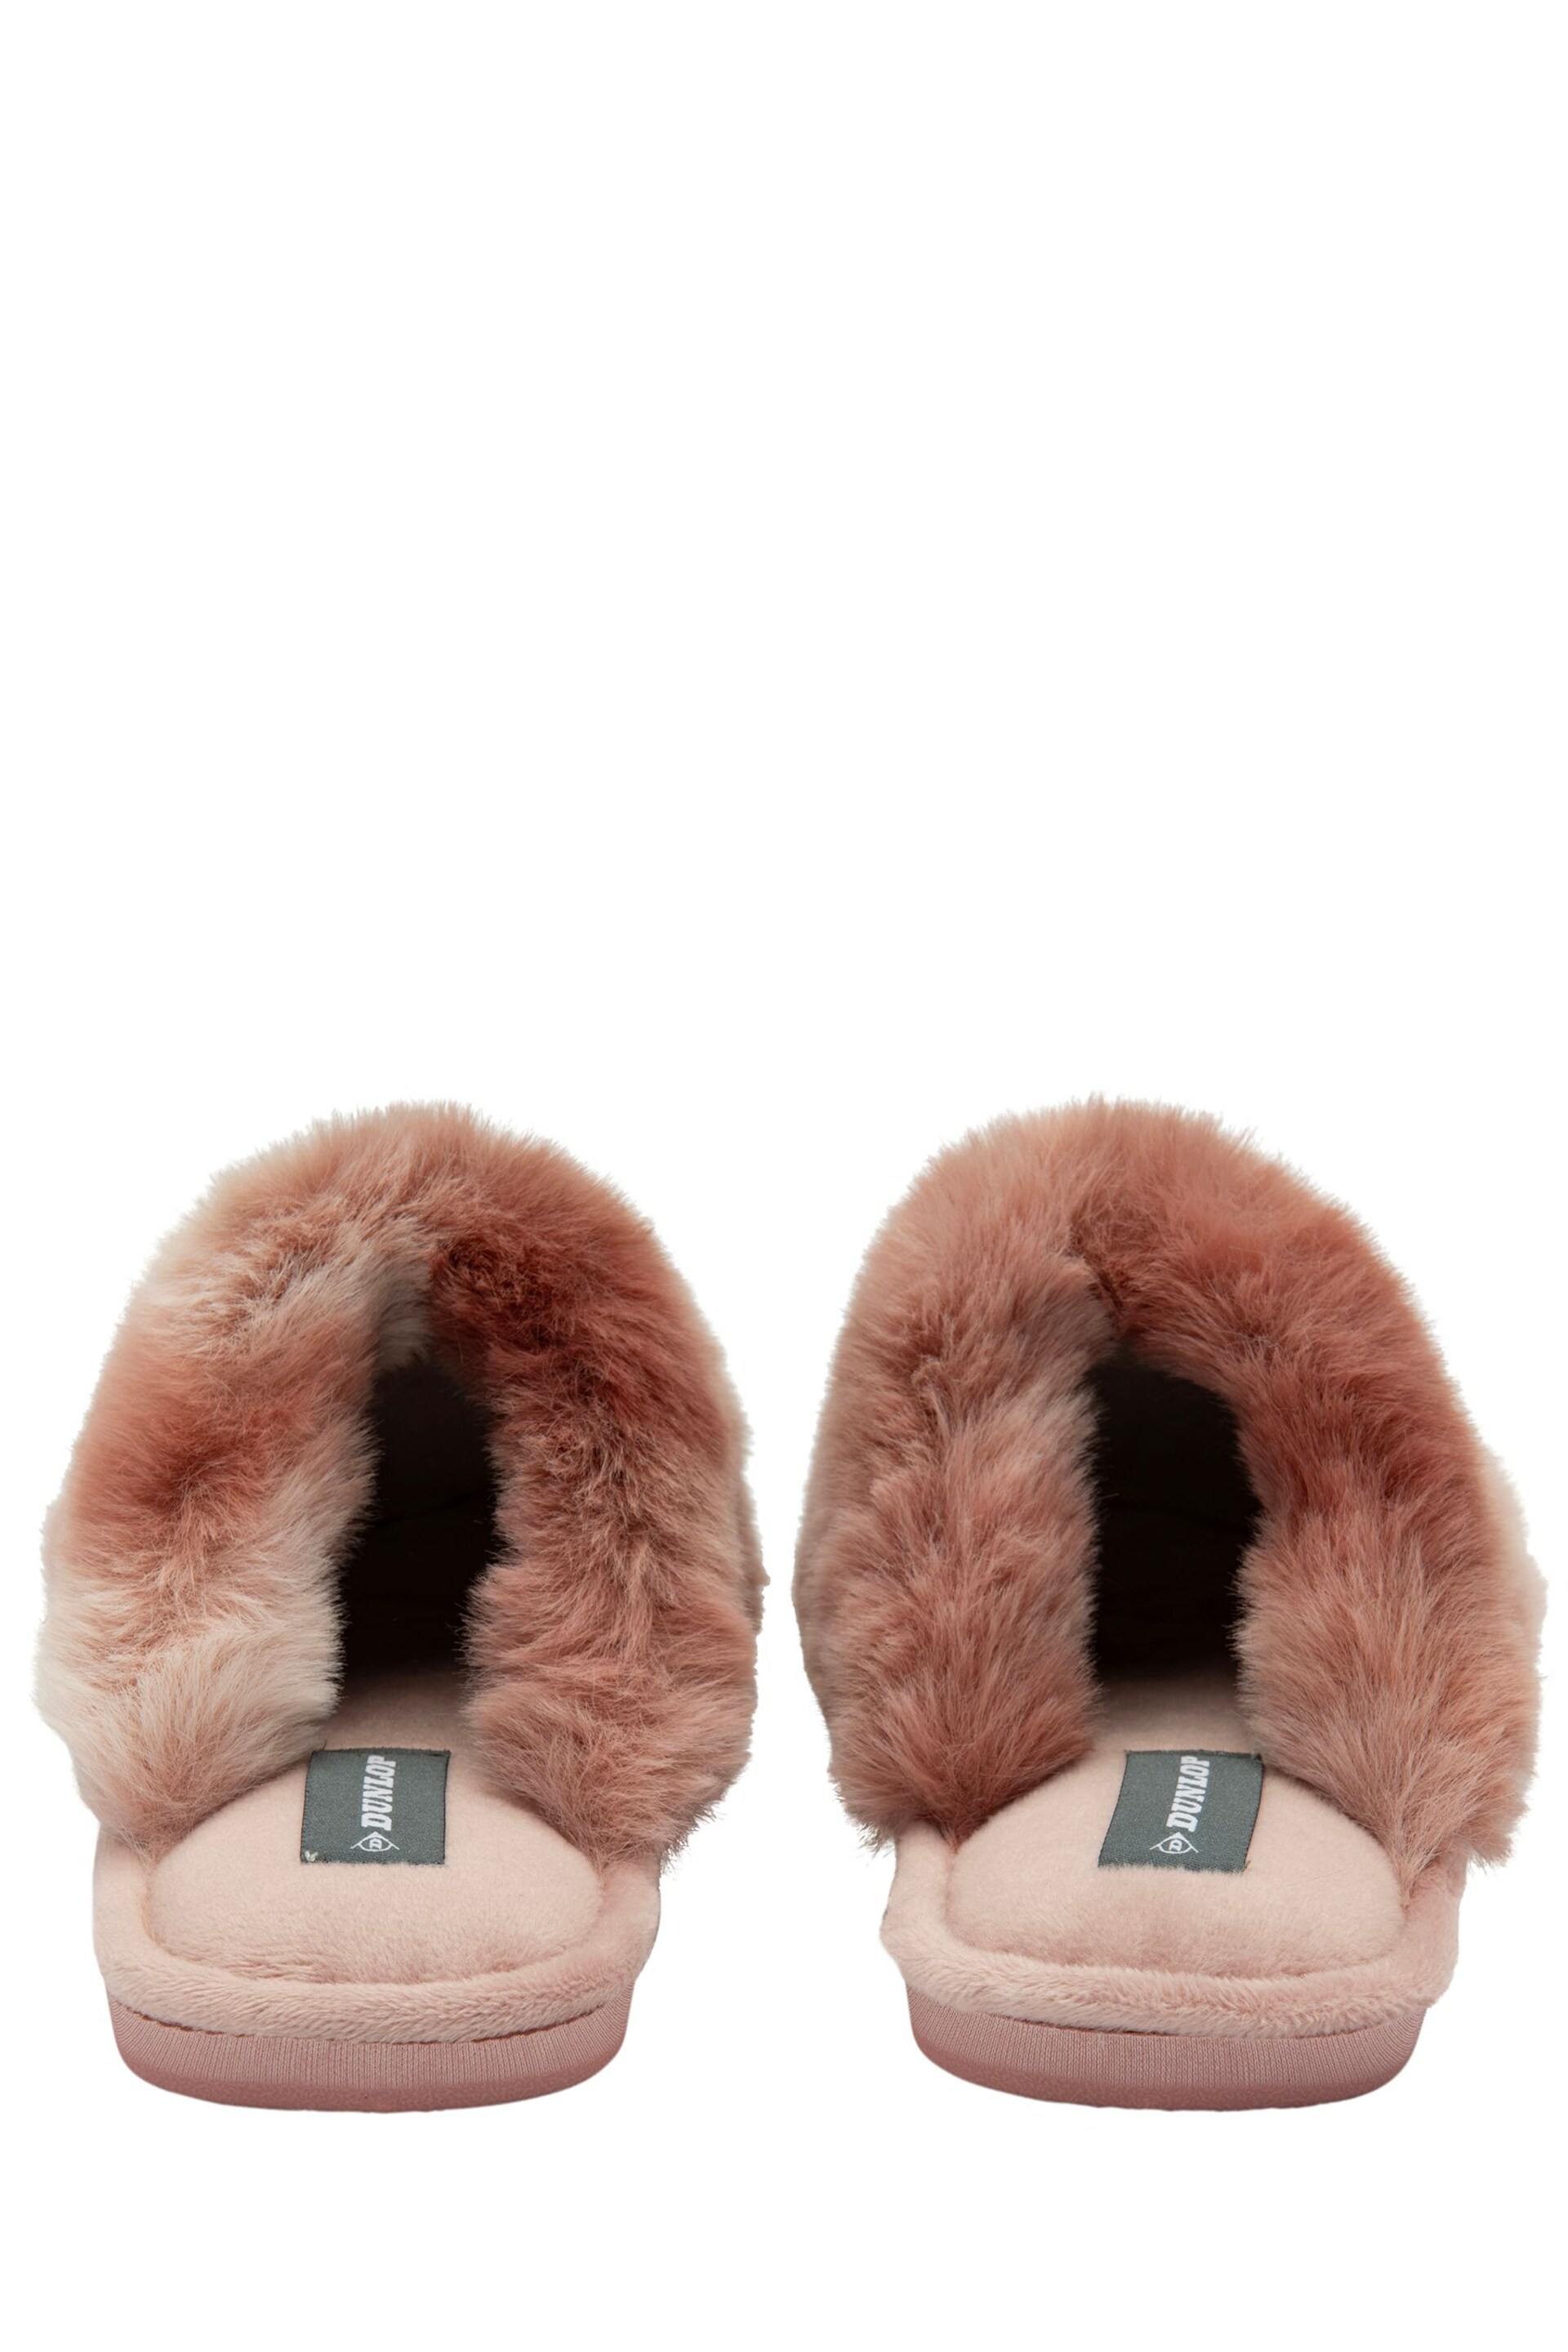 Dunlop Pink Ladies Closed Toe Faux Fur Mule Slippers - Image 3 of 4